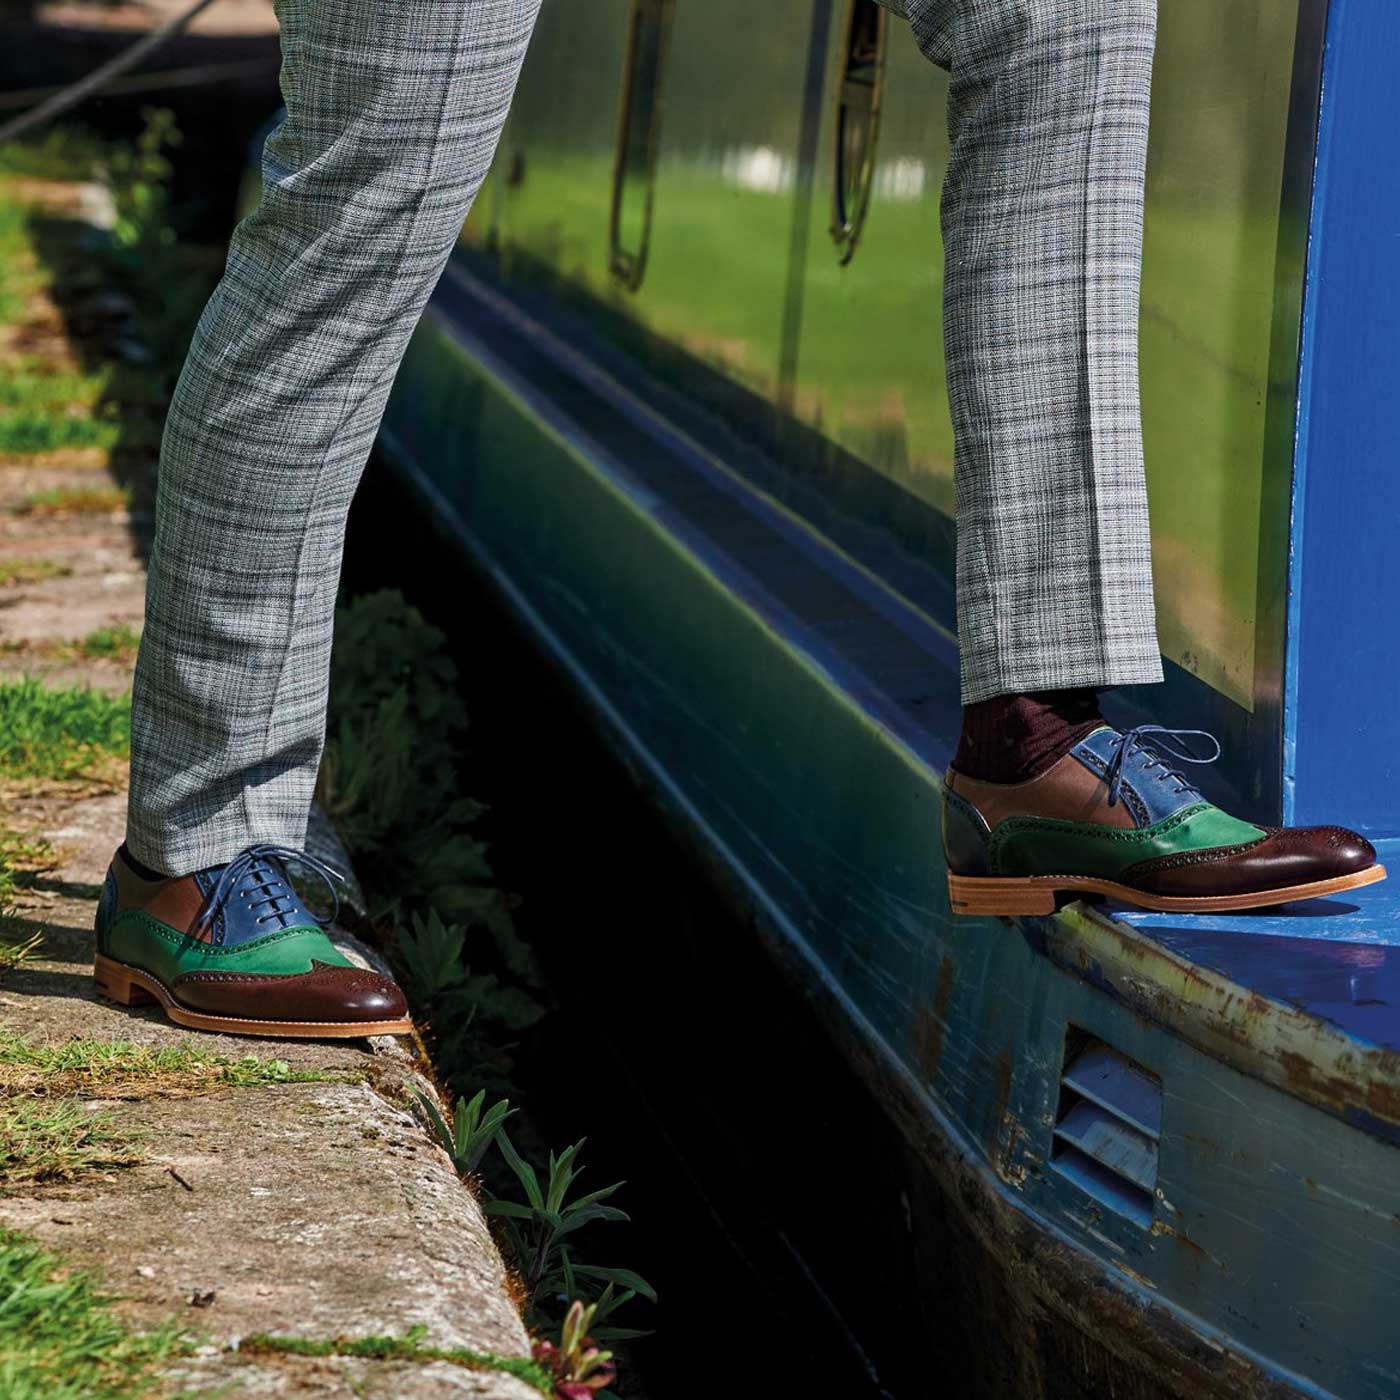 BARKER Valiant Shoes - Mens Brogues - Ebony, Green & Blue Hand Painted